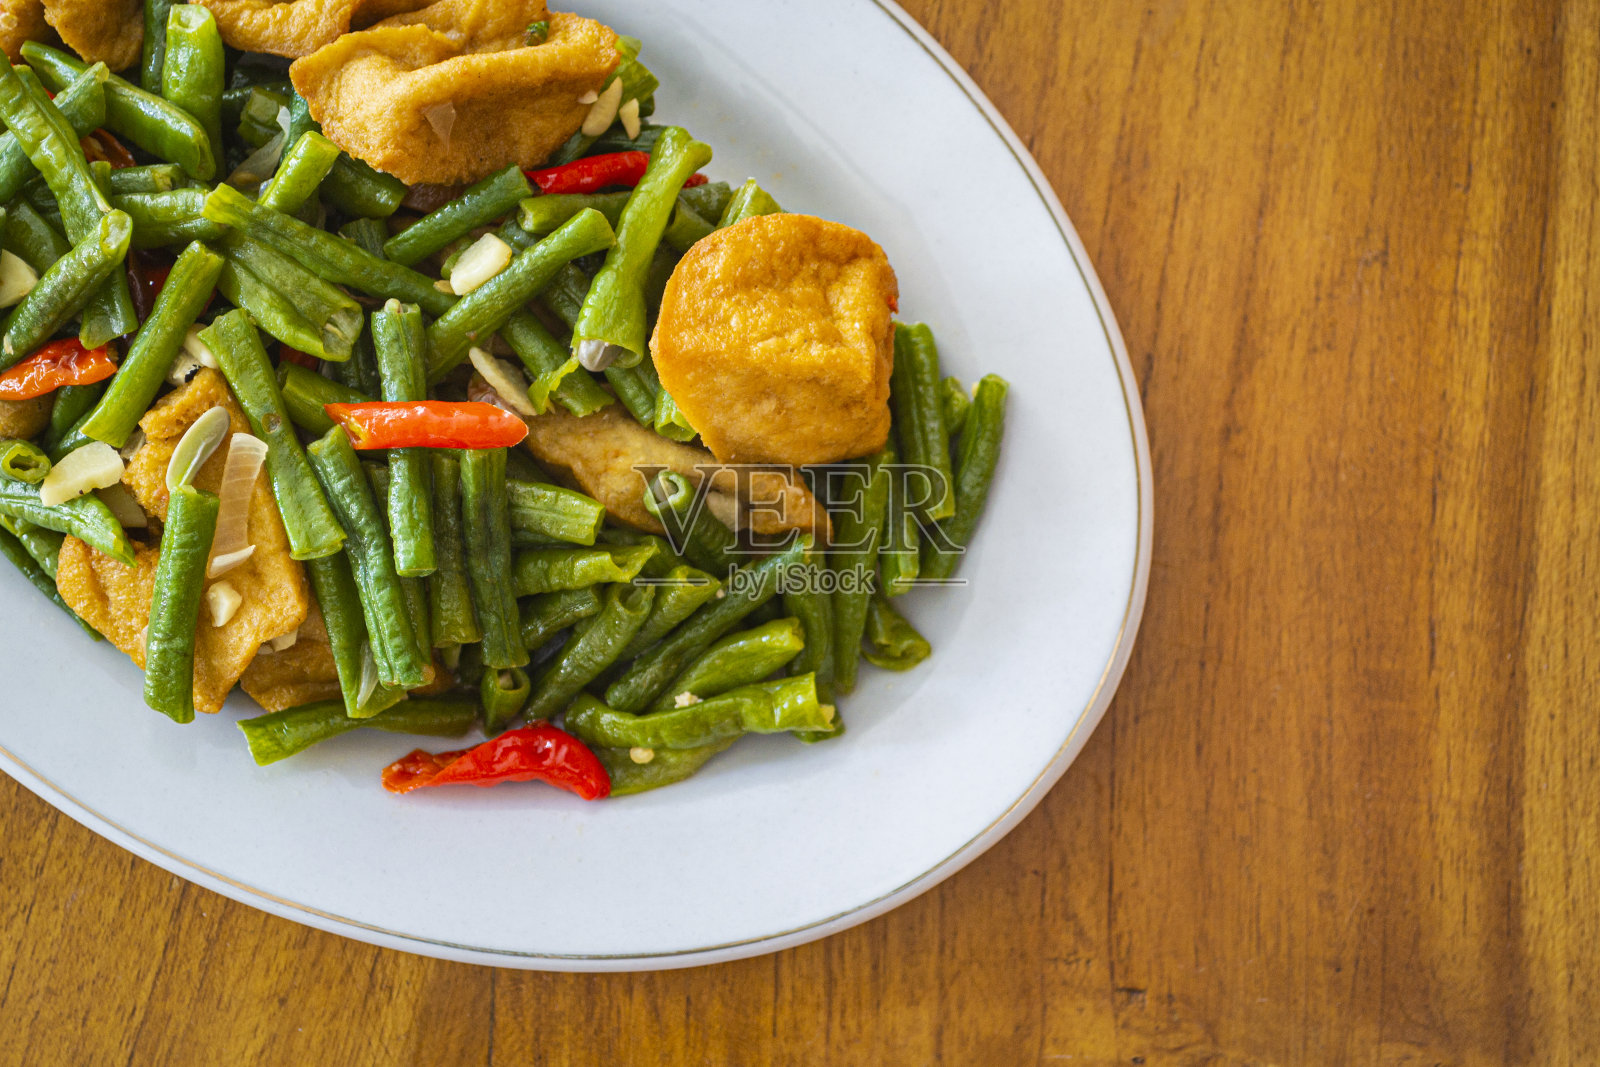 Tumis tahu kacang panjang是印度尼西亚的一种食物，由新鲜的长豆、豆腐、辣椒和其他原料煸炒而成。在木制背景上的白色盘子里照片摄影图片